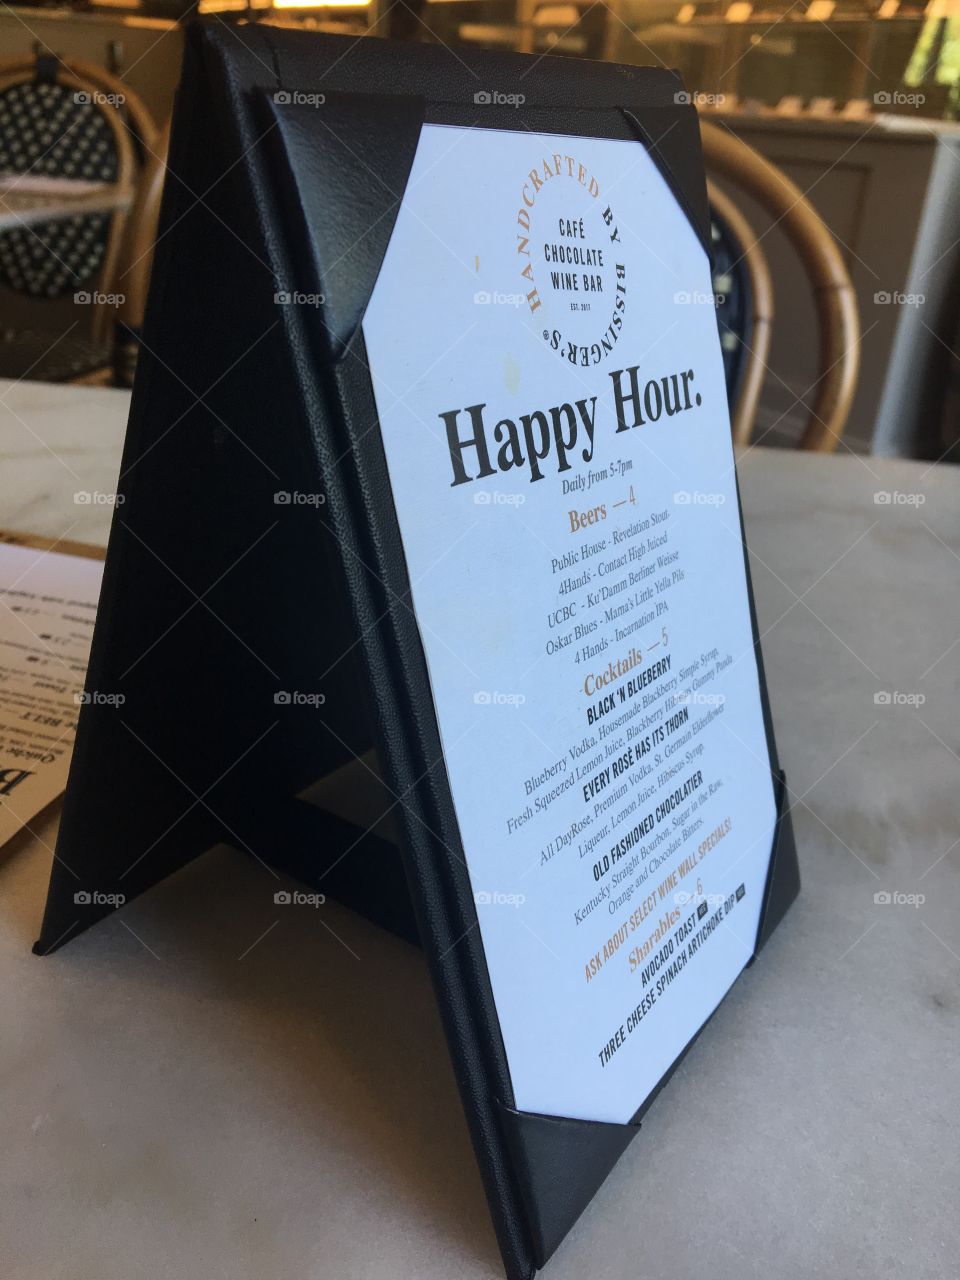 Happy hour city restaurant bar wine beer sign marble bistro handmade